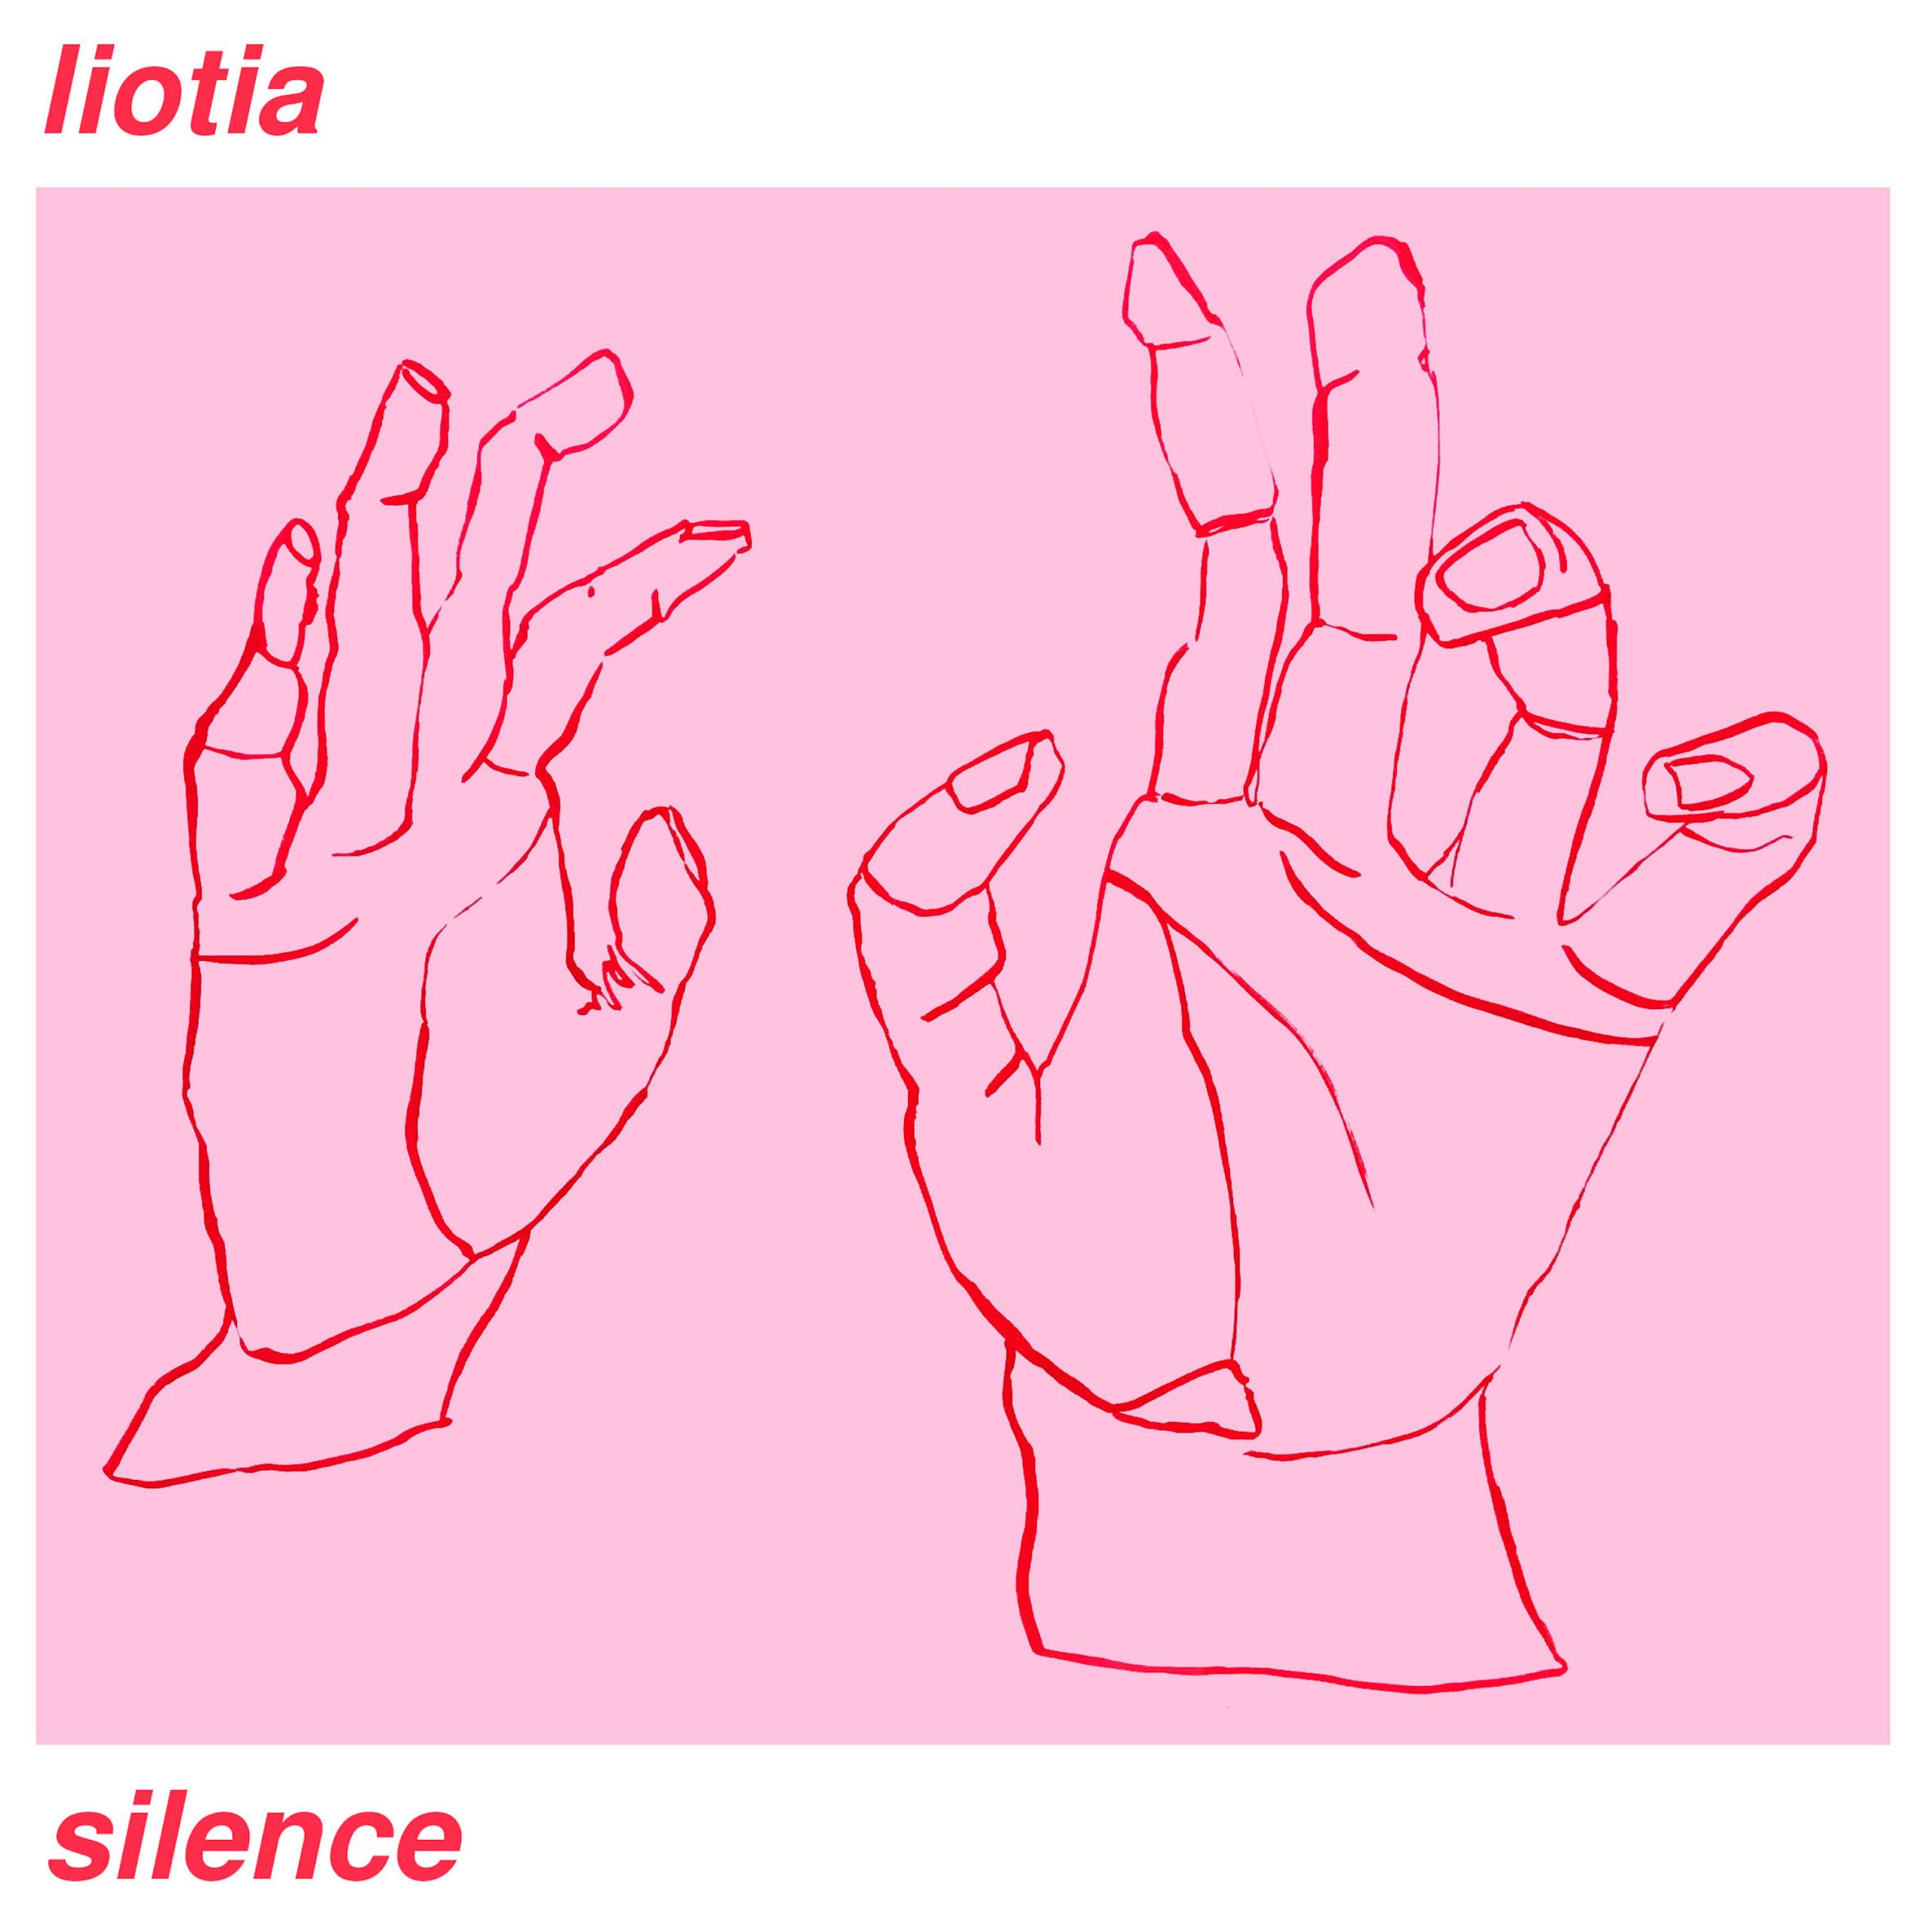 Liotia - Silence single cover